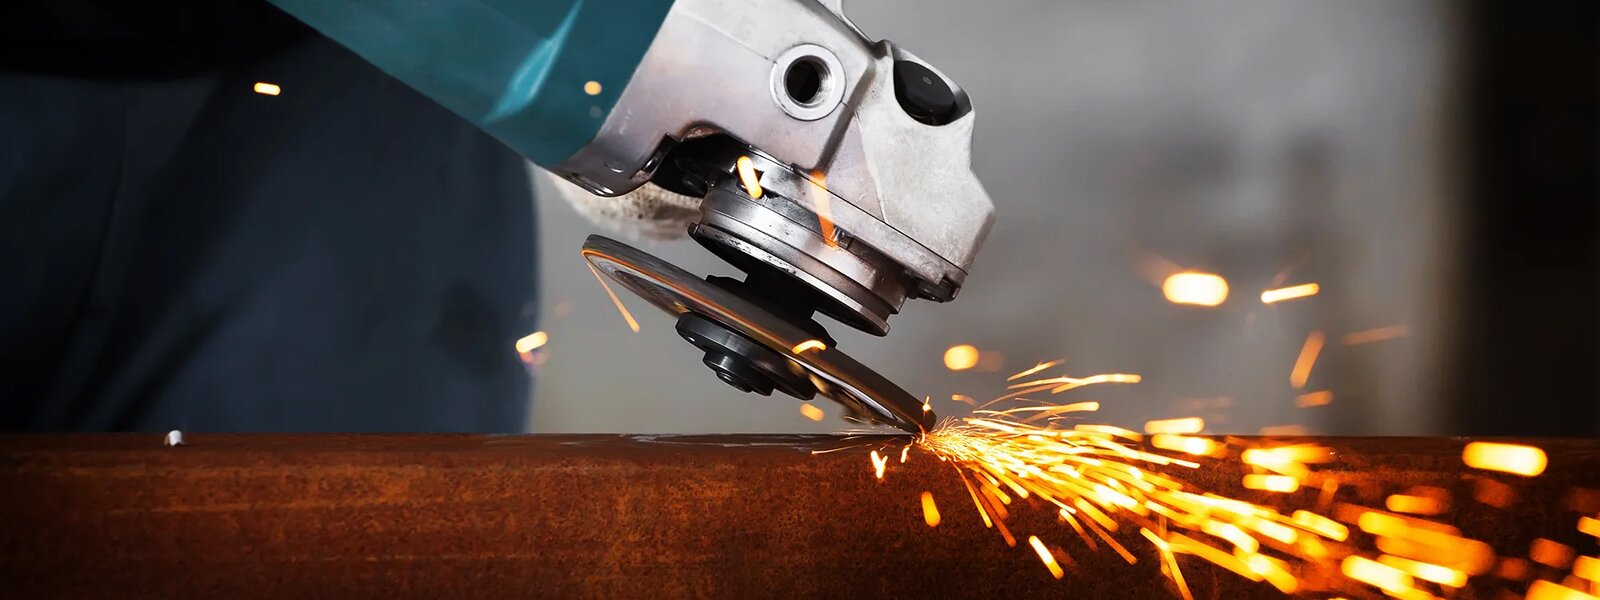 worker using circular saw to cut metal